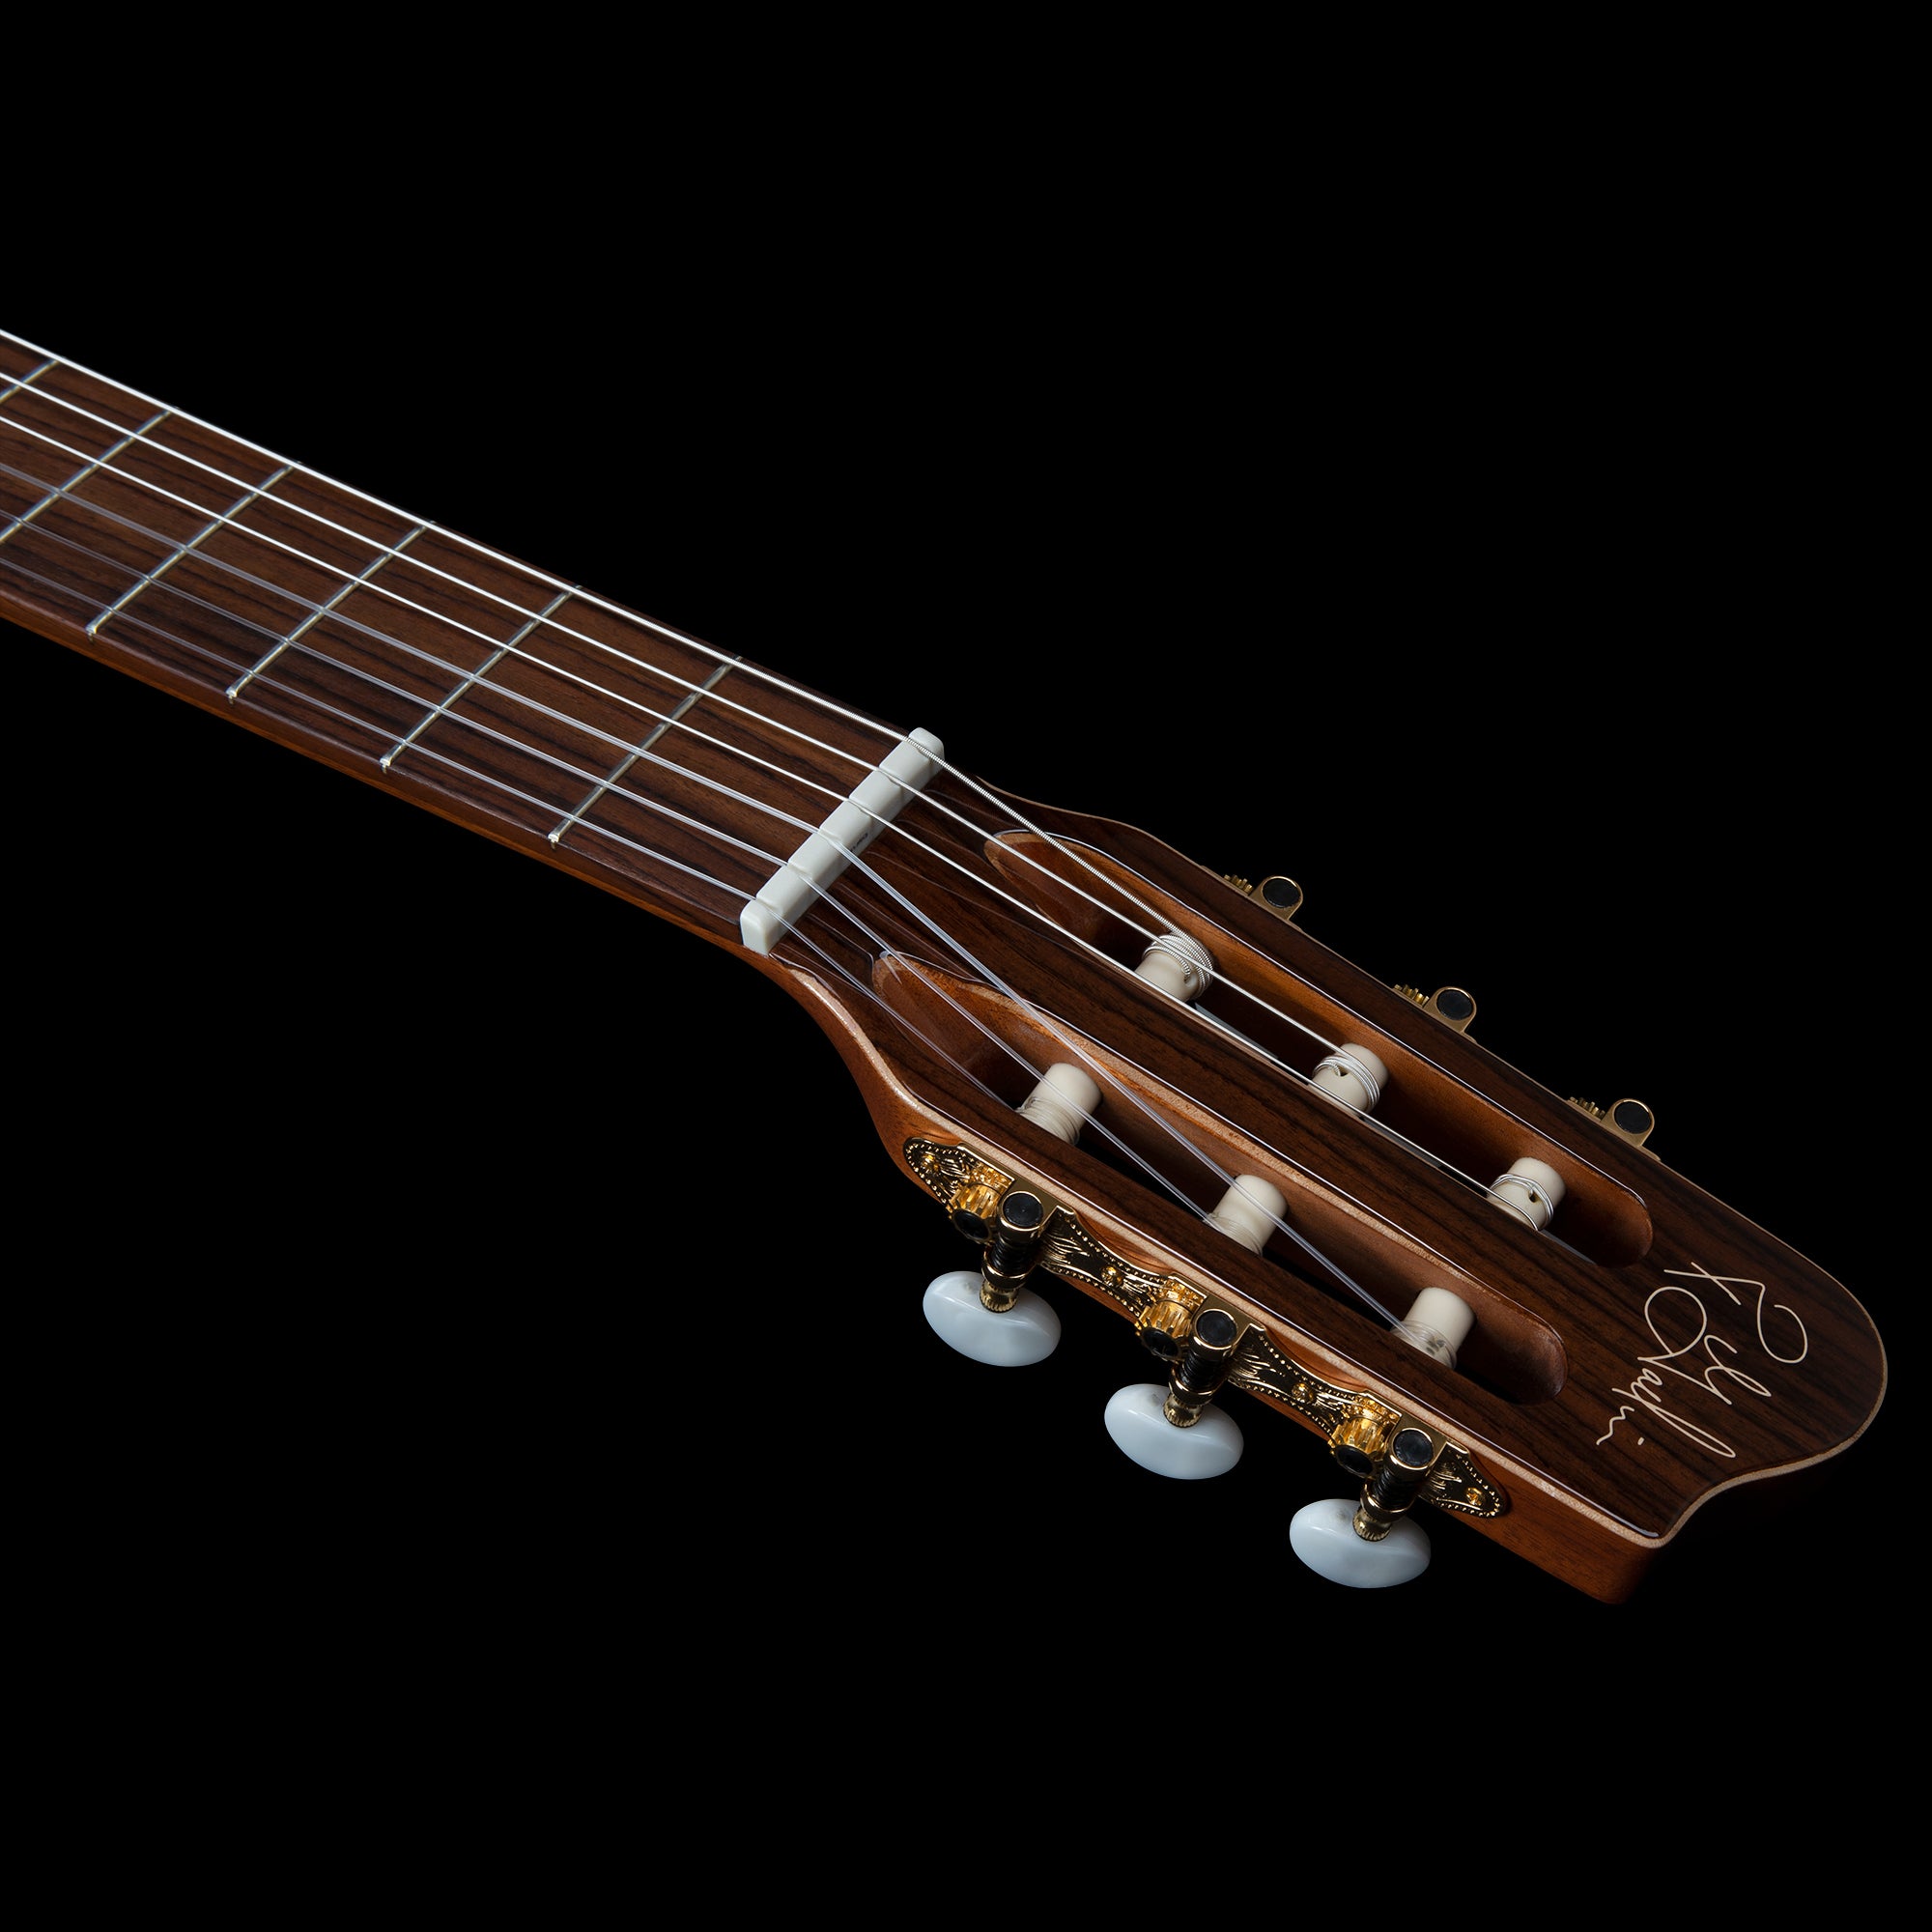 Godin Concert CW QIT Cedar & Mahogany 6 String RH Acoustic-Electric Classical Guitar (049653)木結他